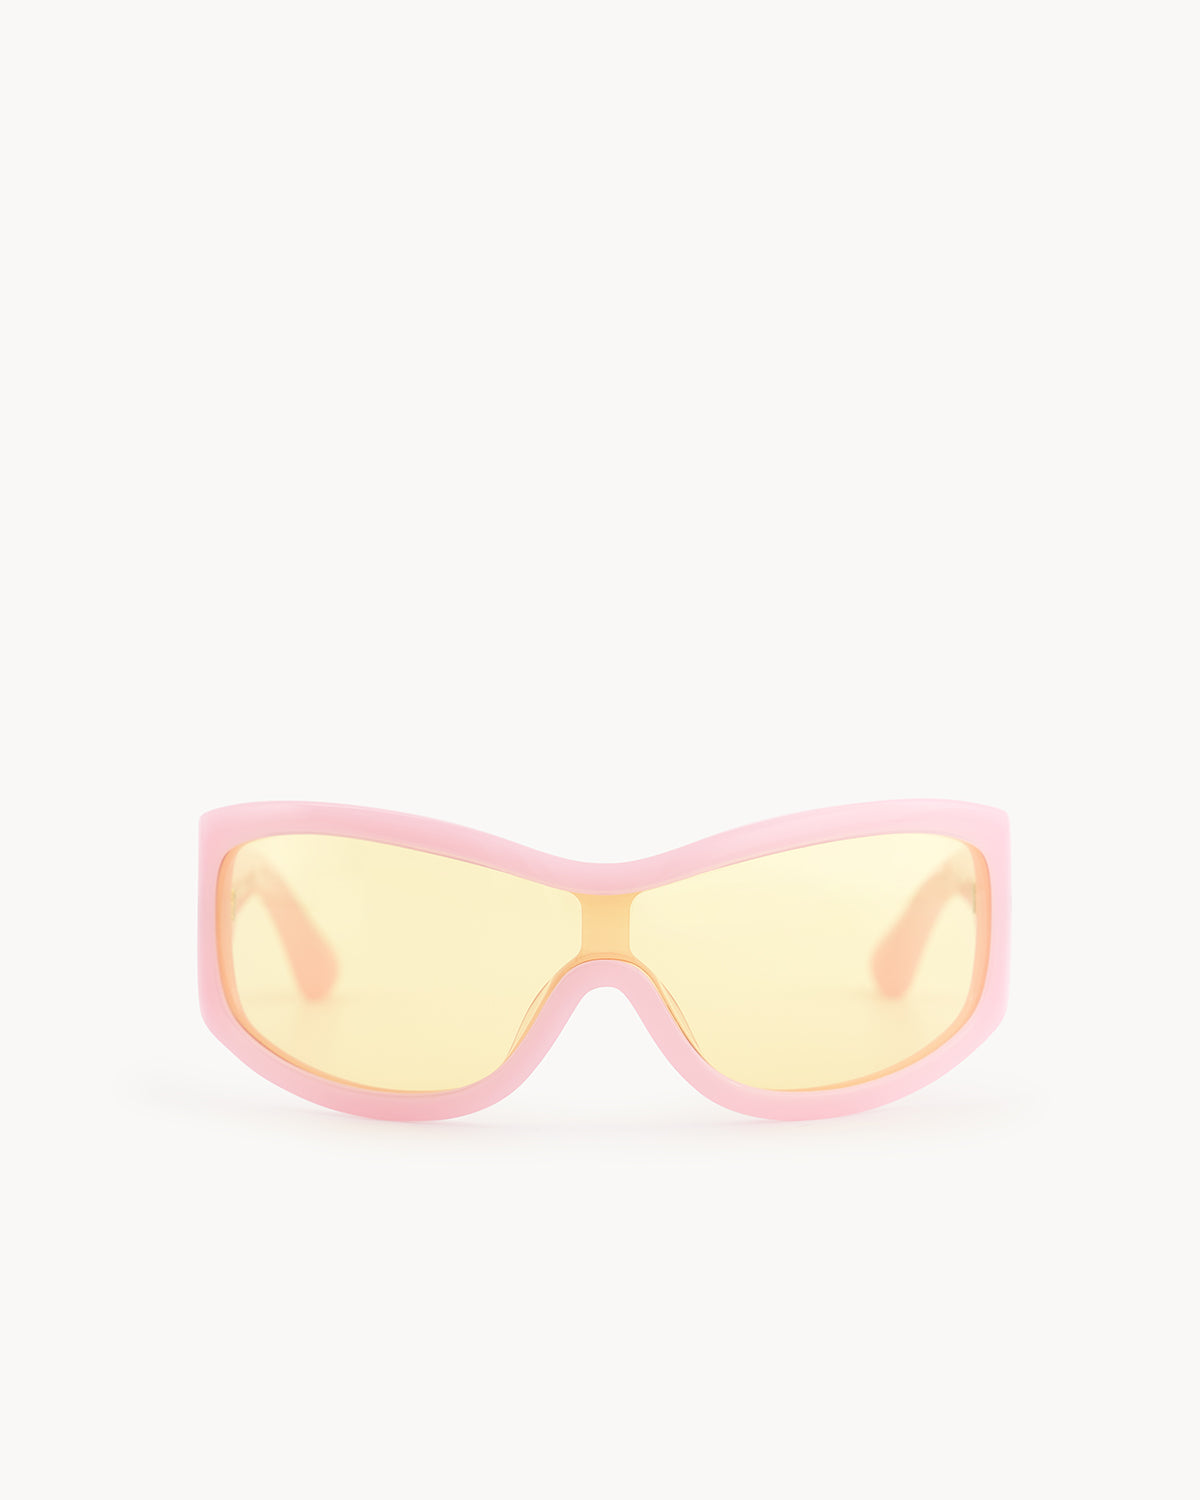 Port Tanger Nunny Sunglasses in Muddy Pink Acetate and Tangerine Lenses 1